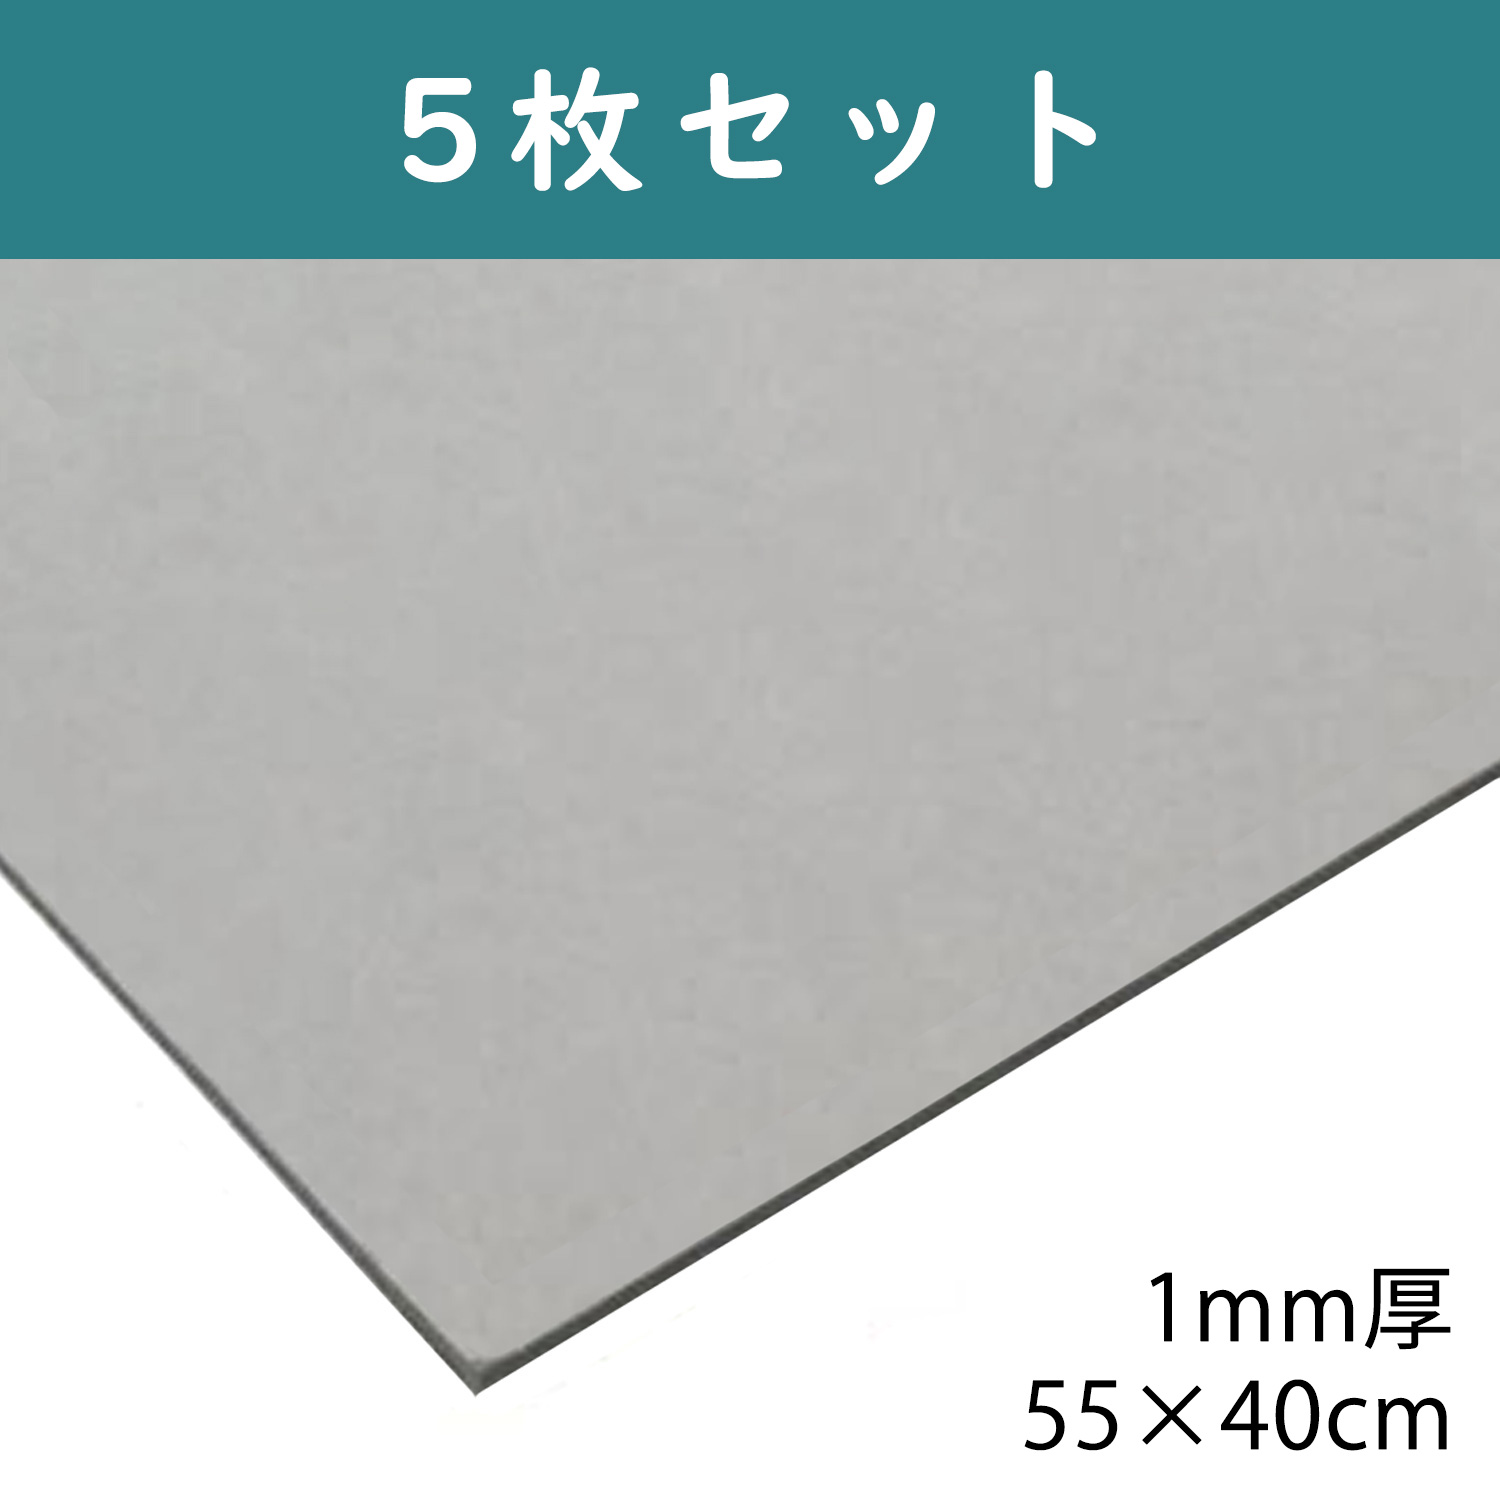 CTN4 グレー厚紙 1mm厚 55×40cm 5枚入 (袋)